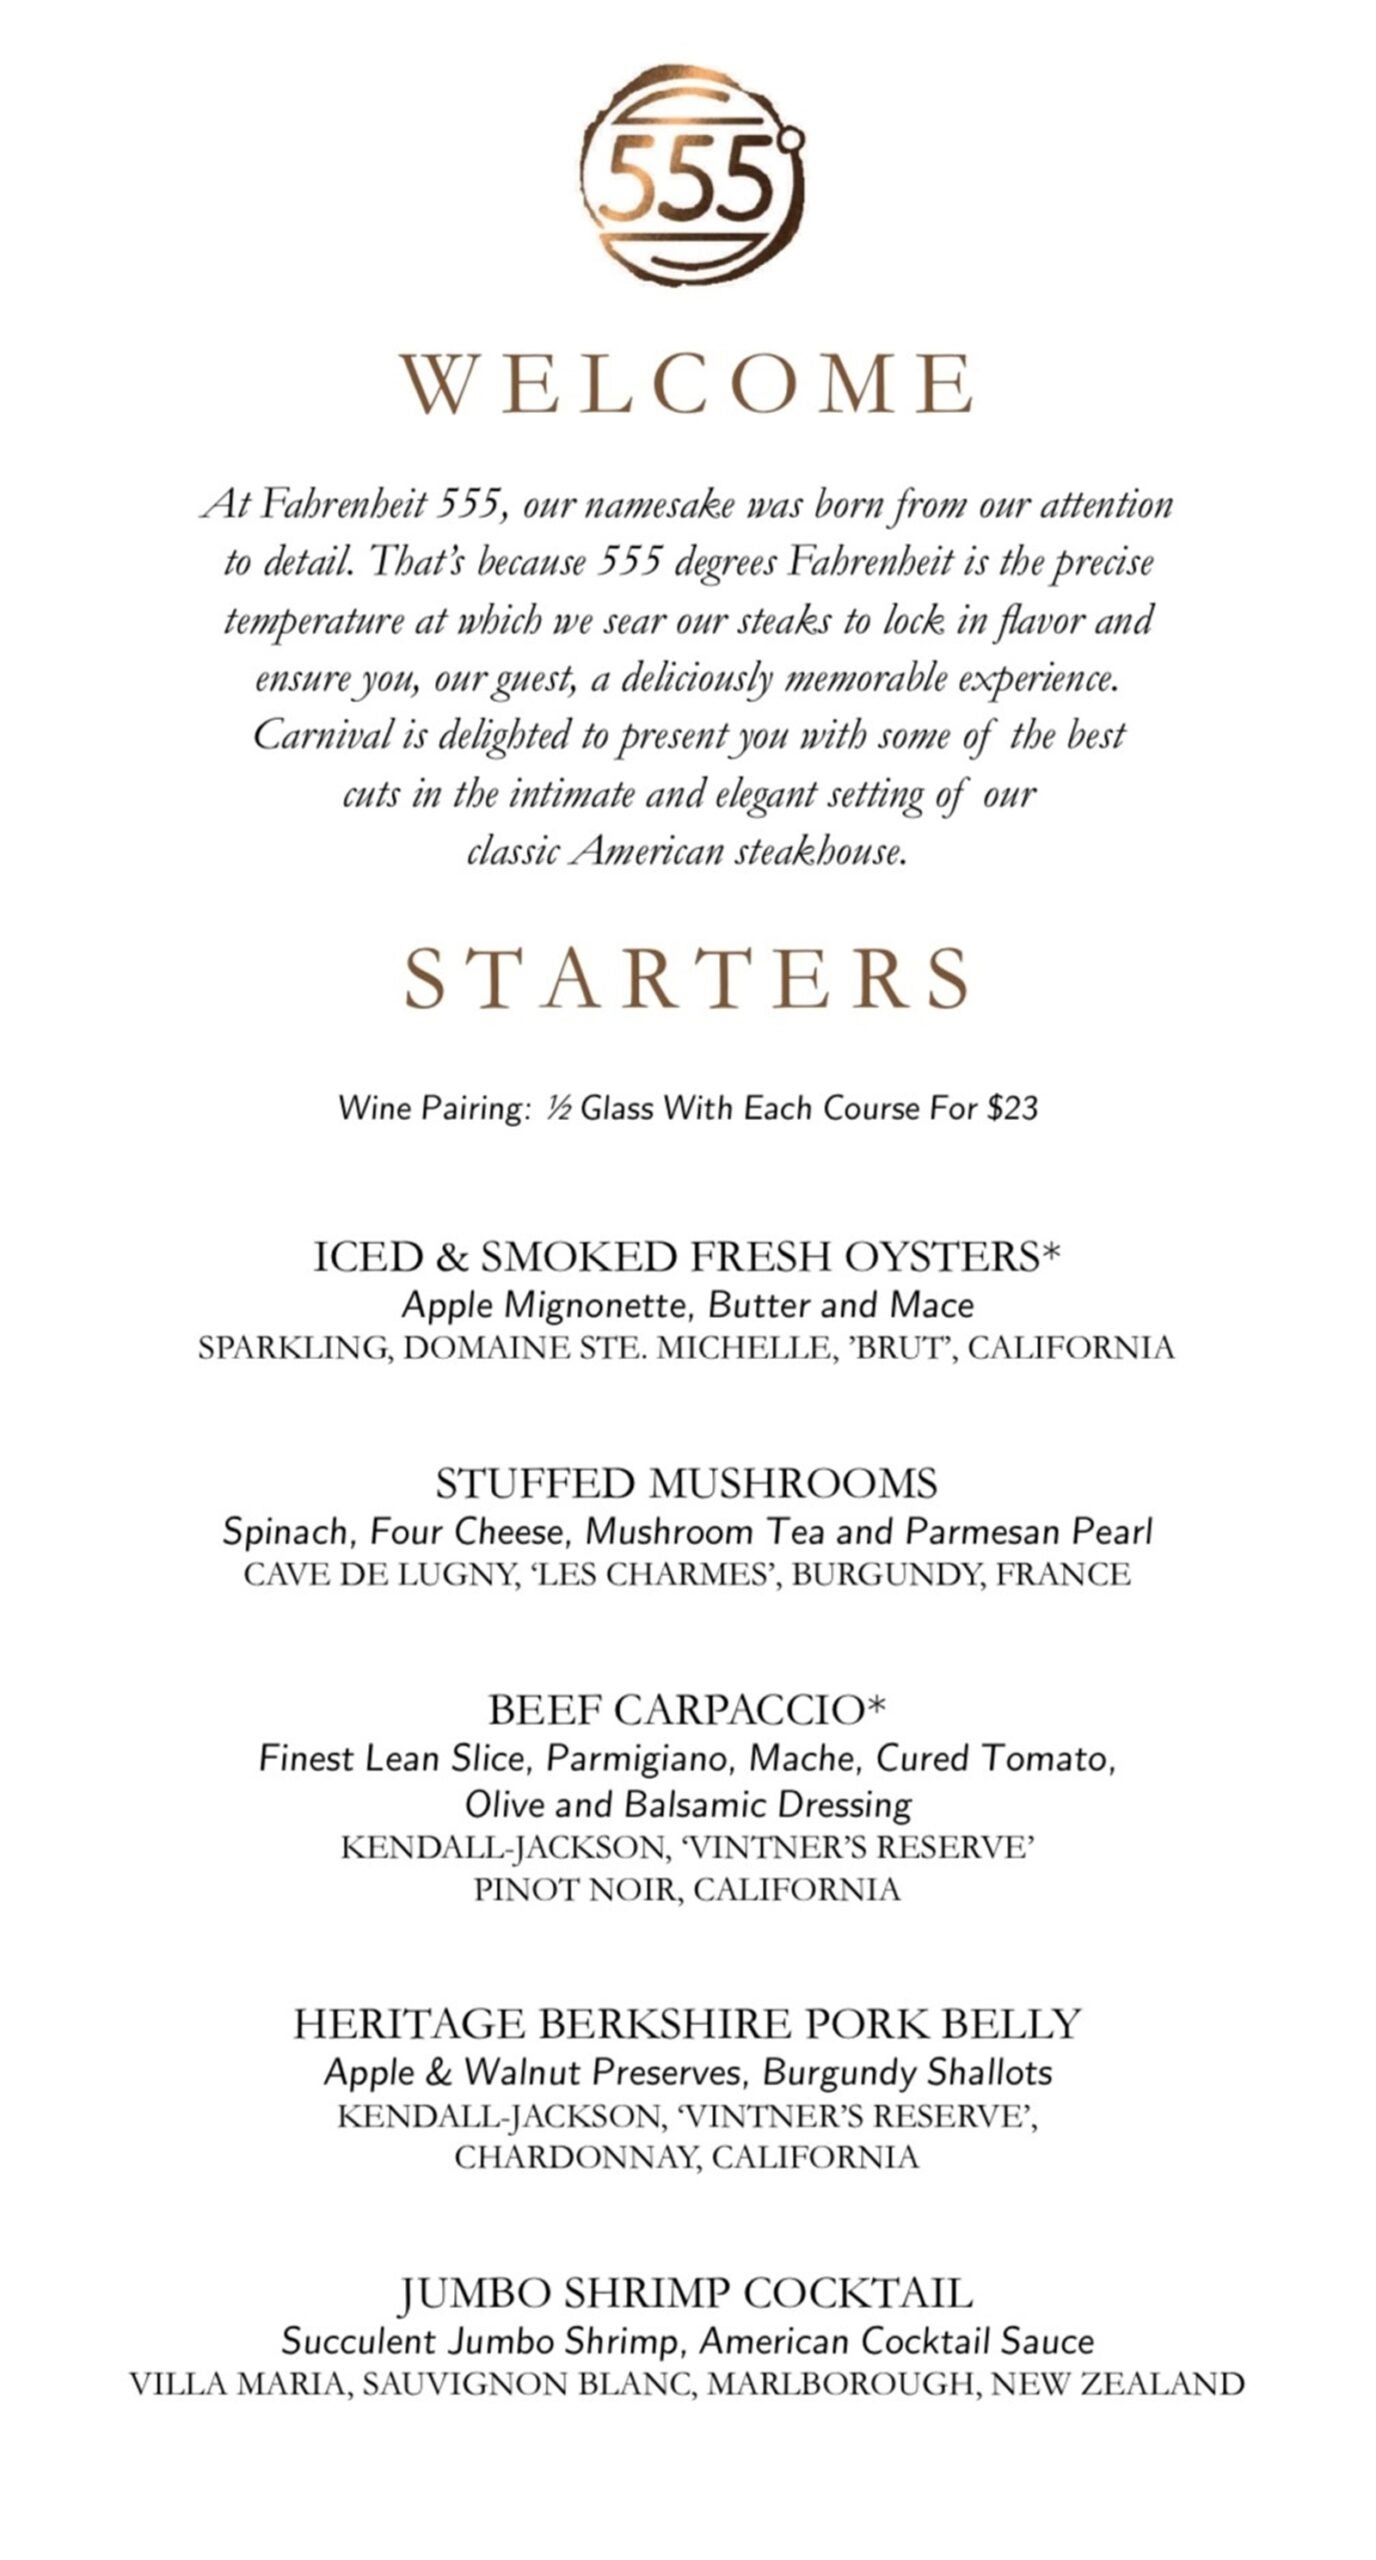 A steakhouse menu listing starters